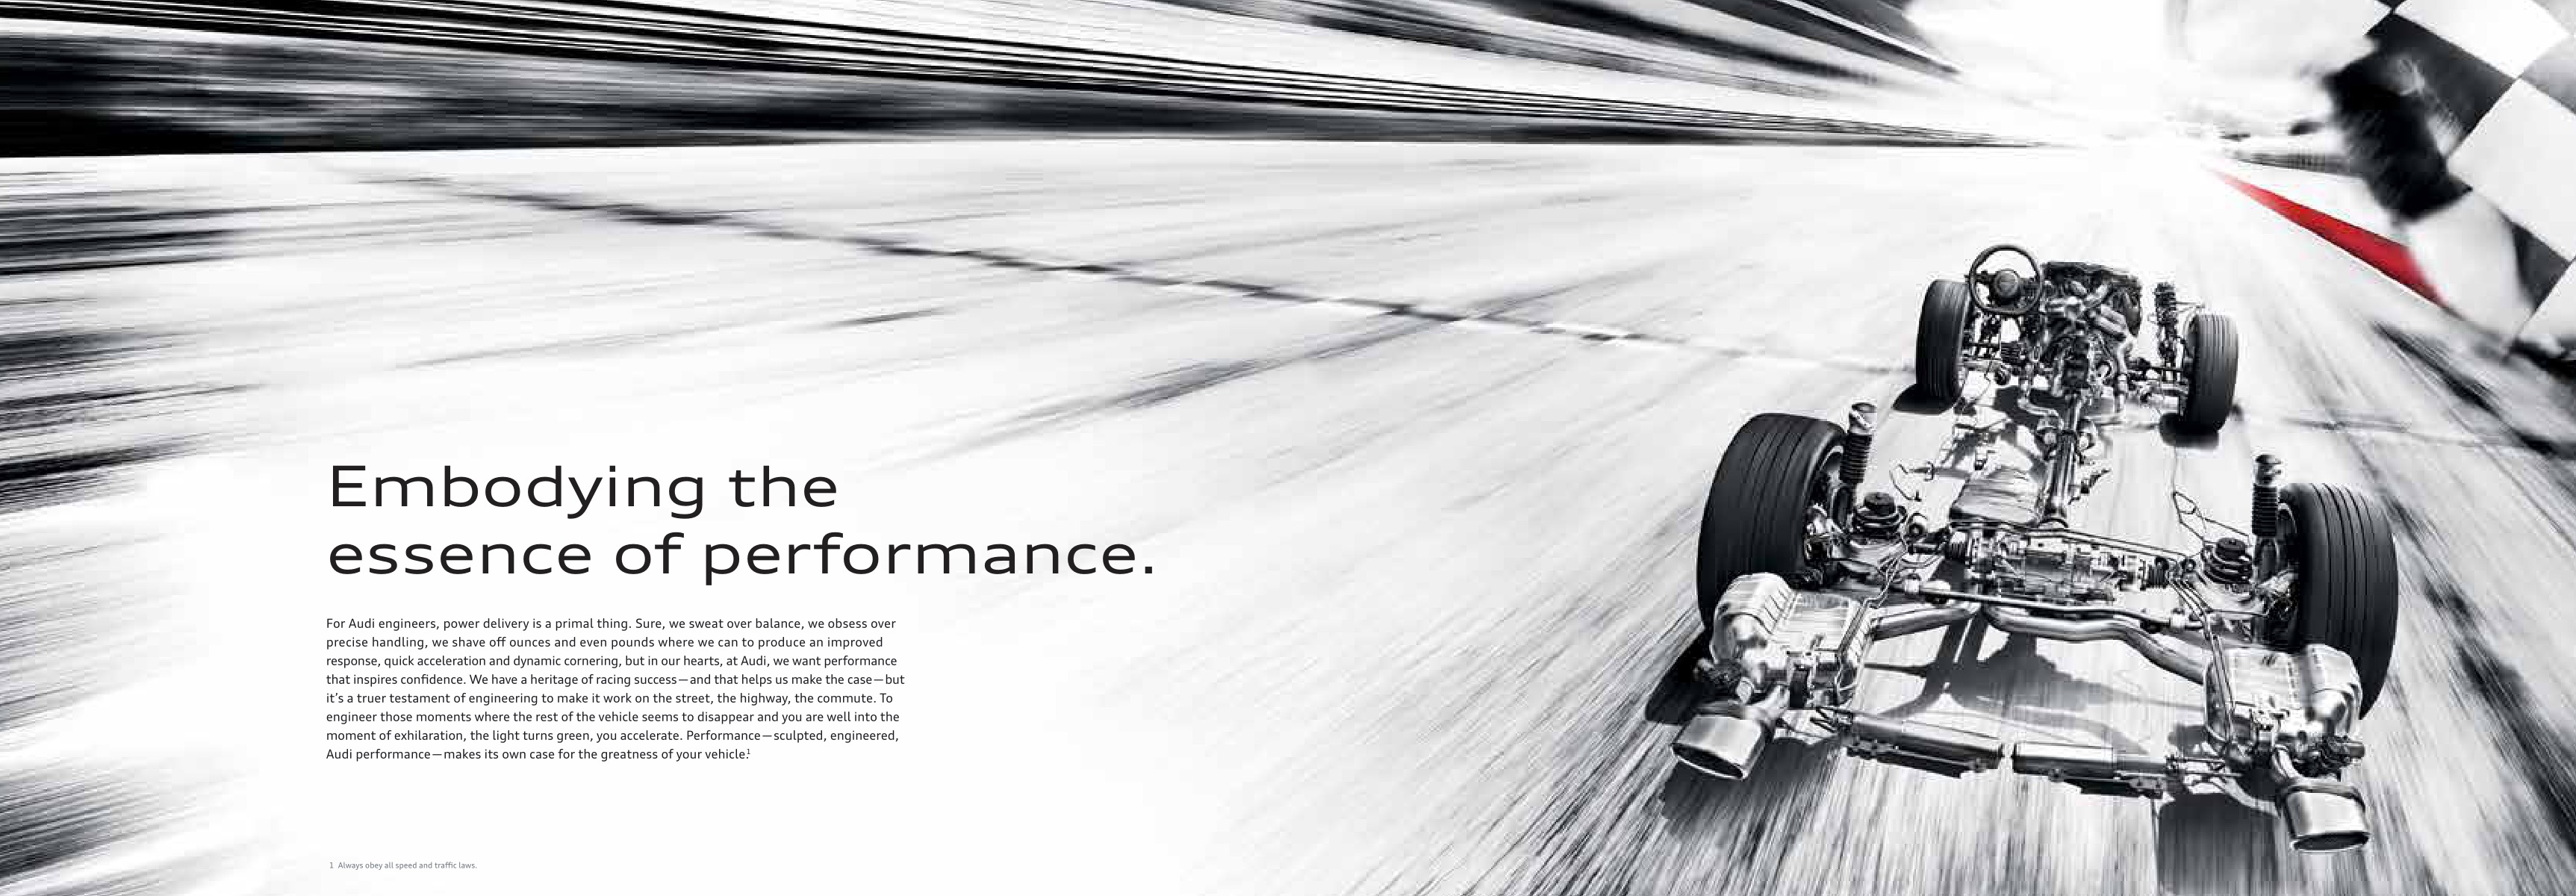 2016 Audi A7 Brochure Page 32